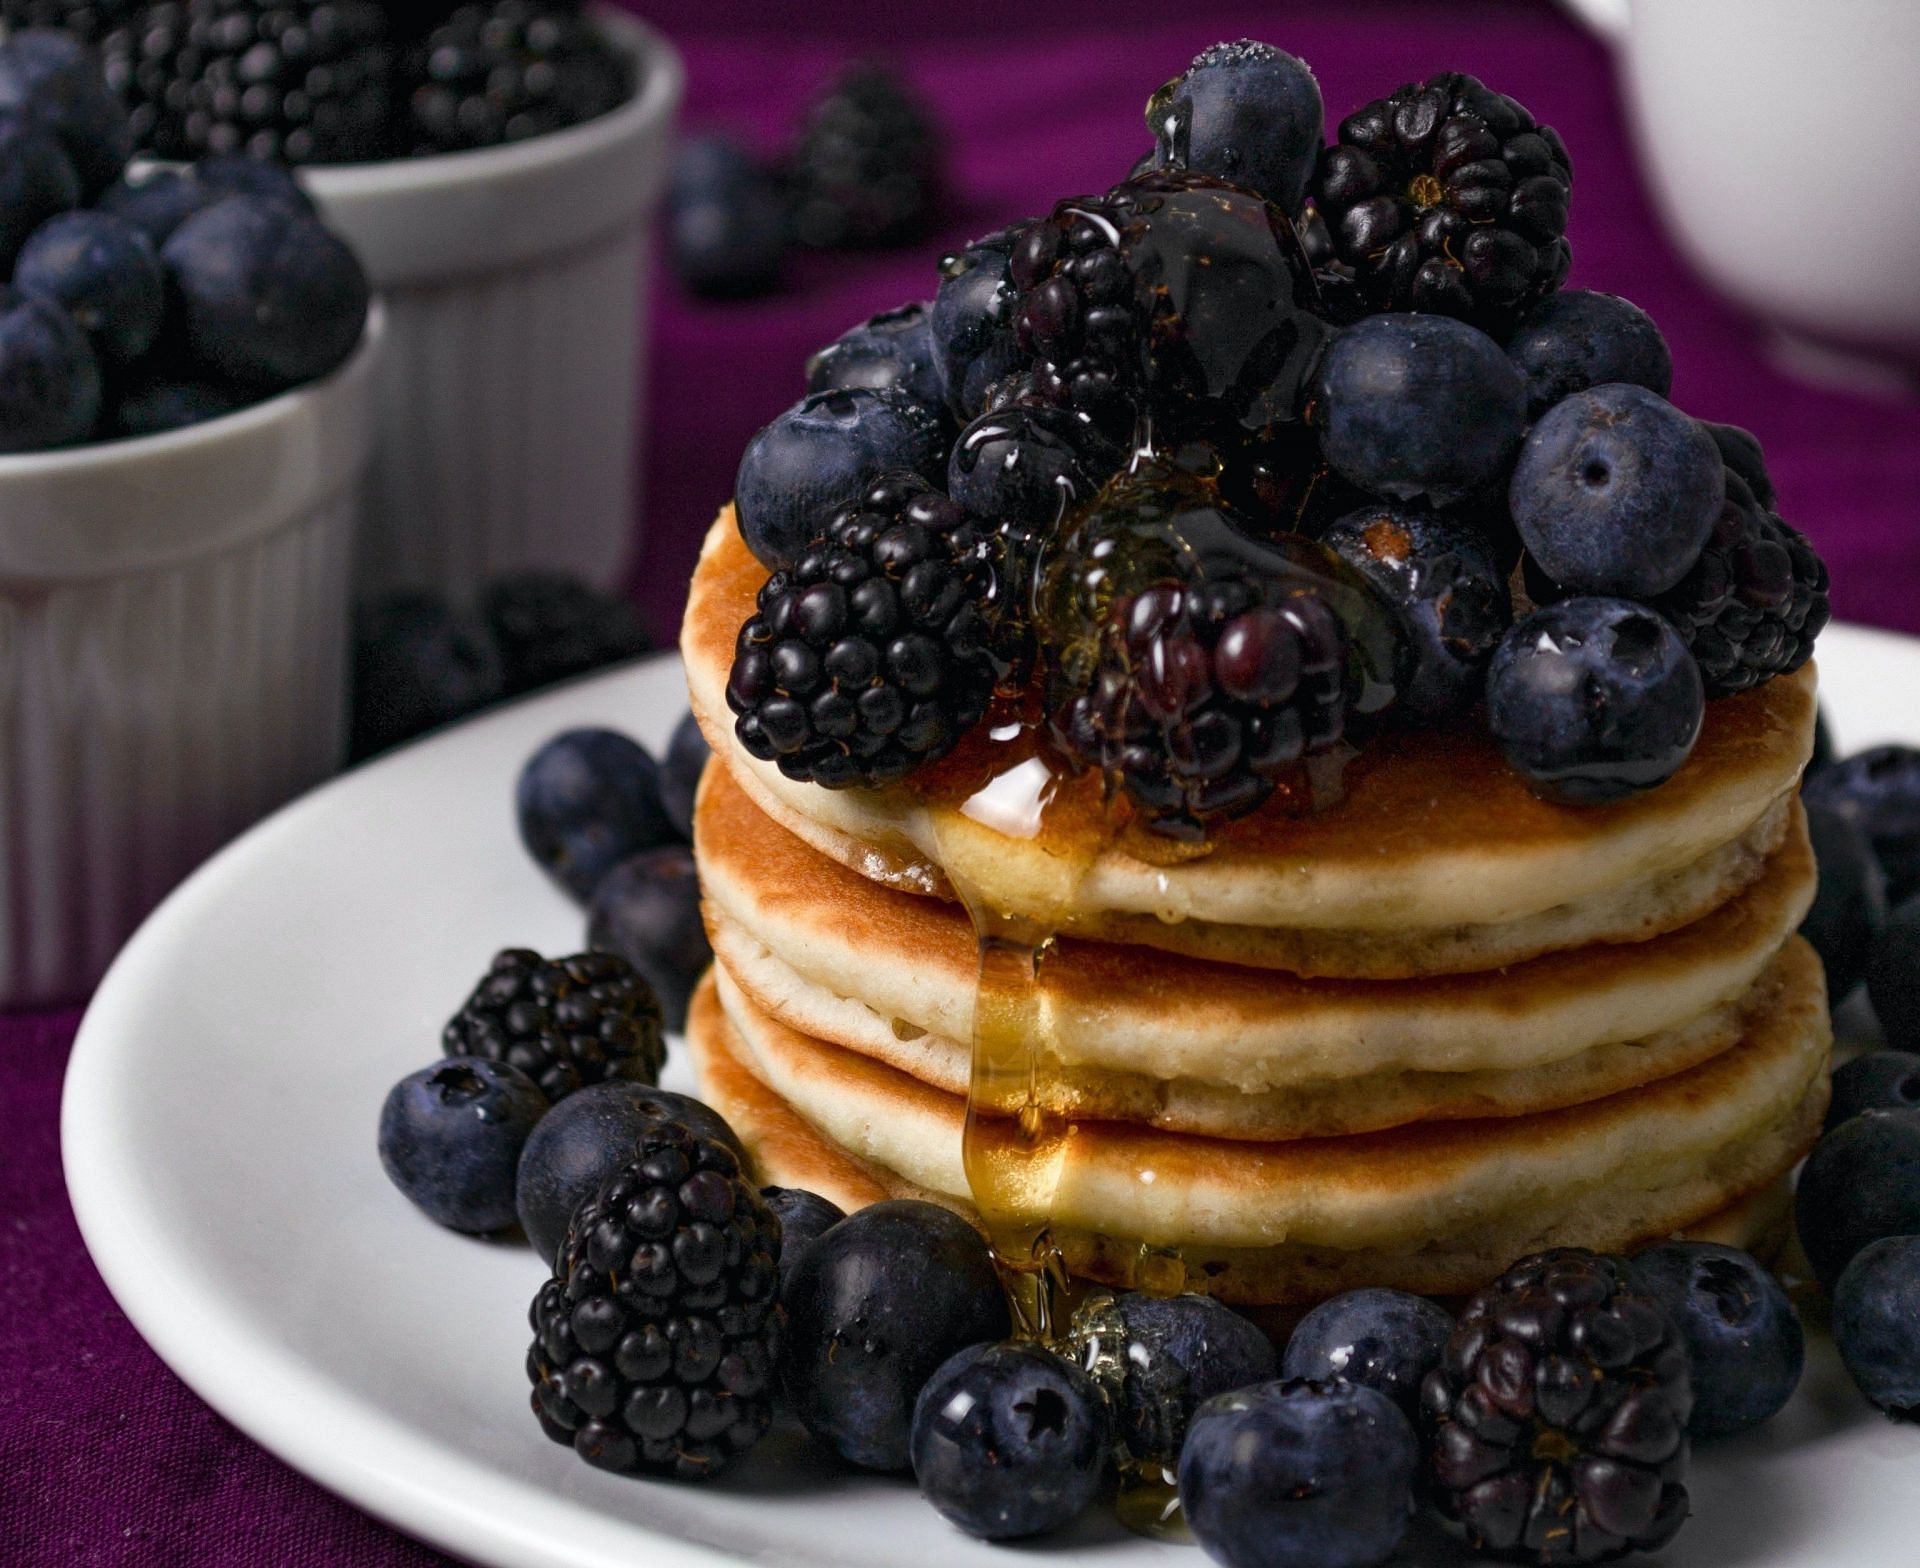 Fluffy, golden pancakes bursting with juicy blueberries, a breakfast favorite (Image via Pexels)